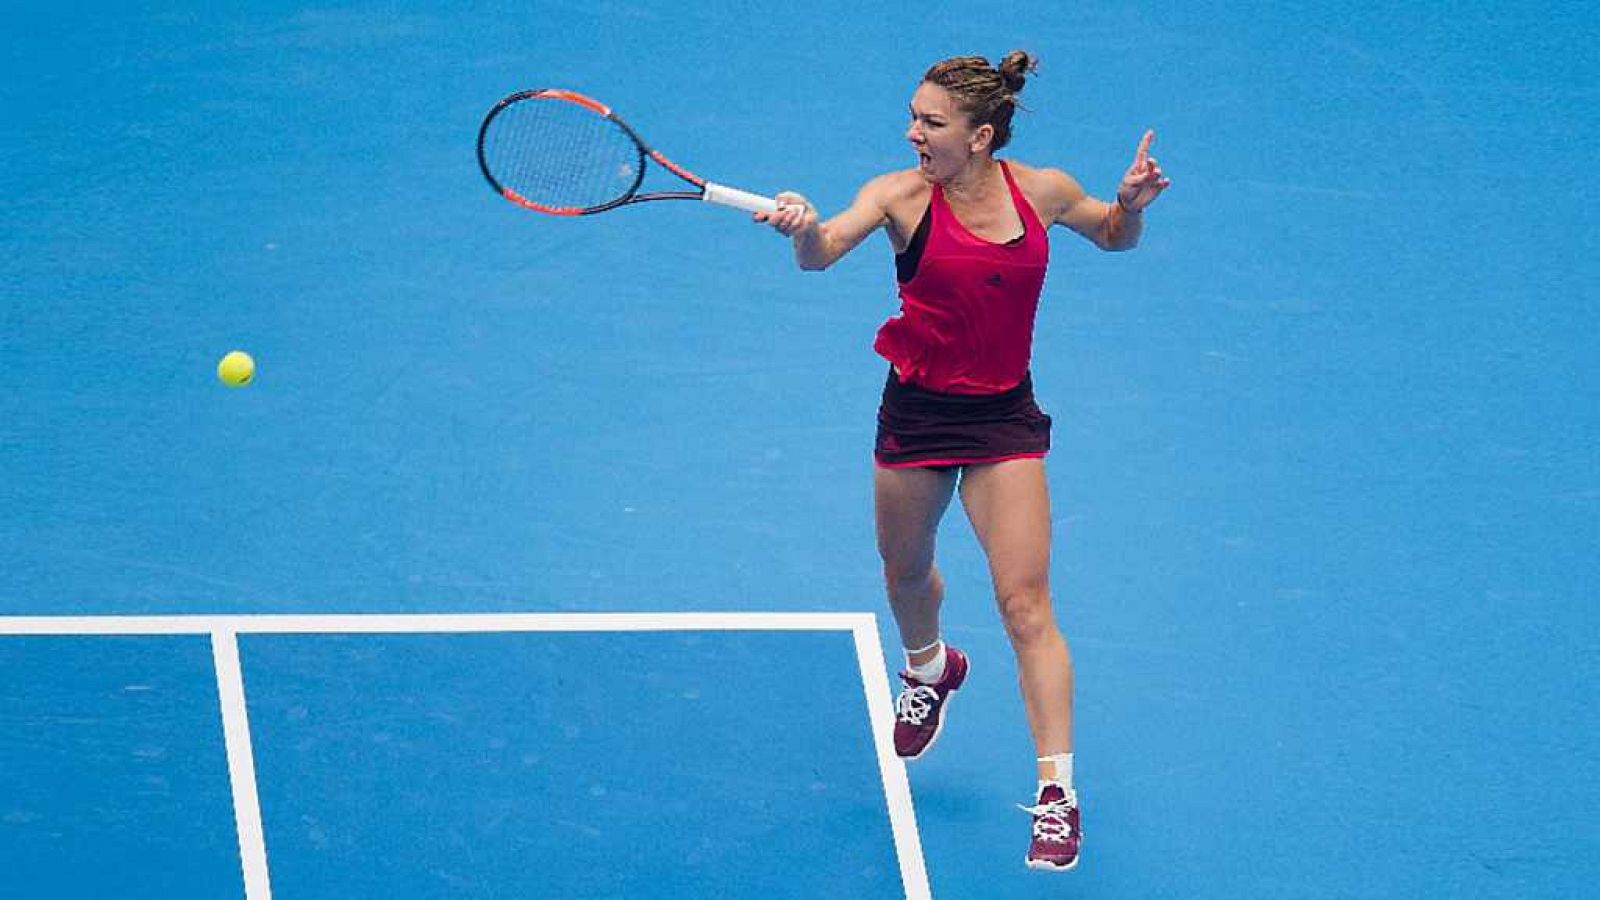 Tenis - WTA Torneo Pekín (China): Ostapenko - Halep - ver ahora